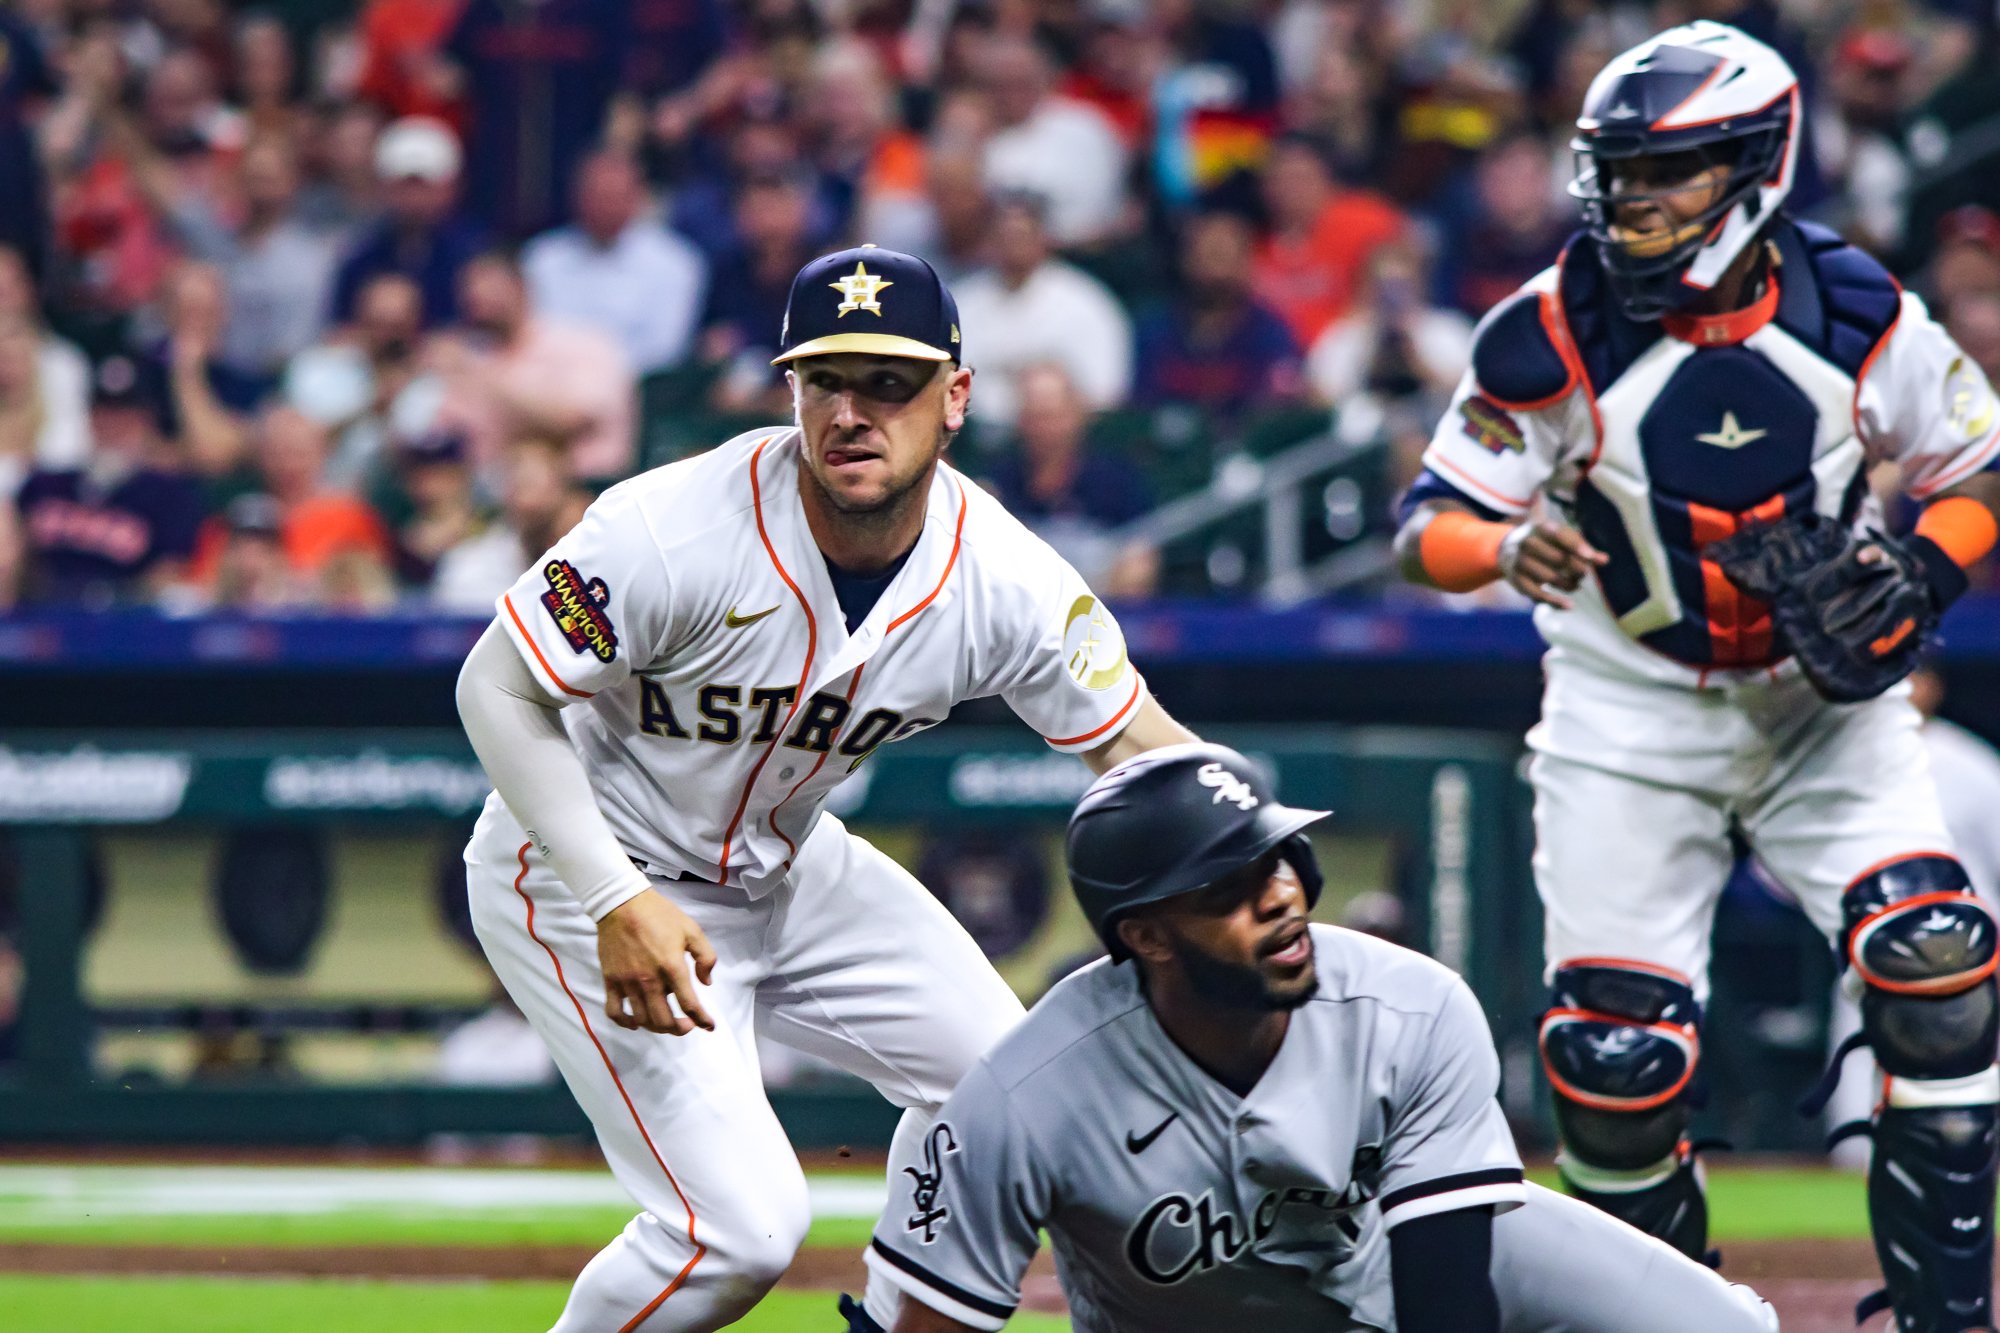 JUN 04 2015: Orbit, the Houston Astros' mascot, waves to the crowd